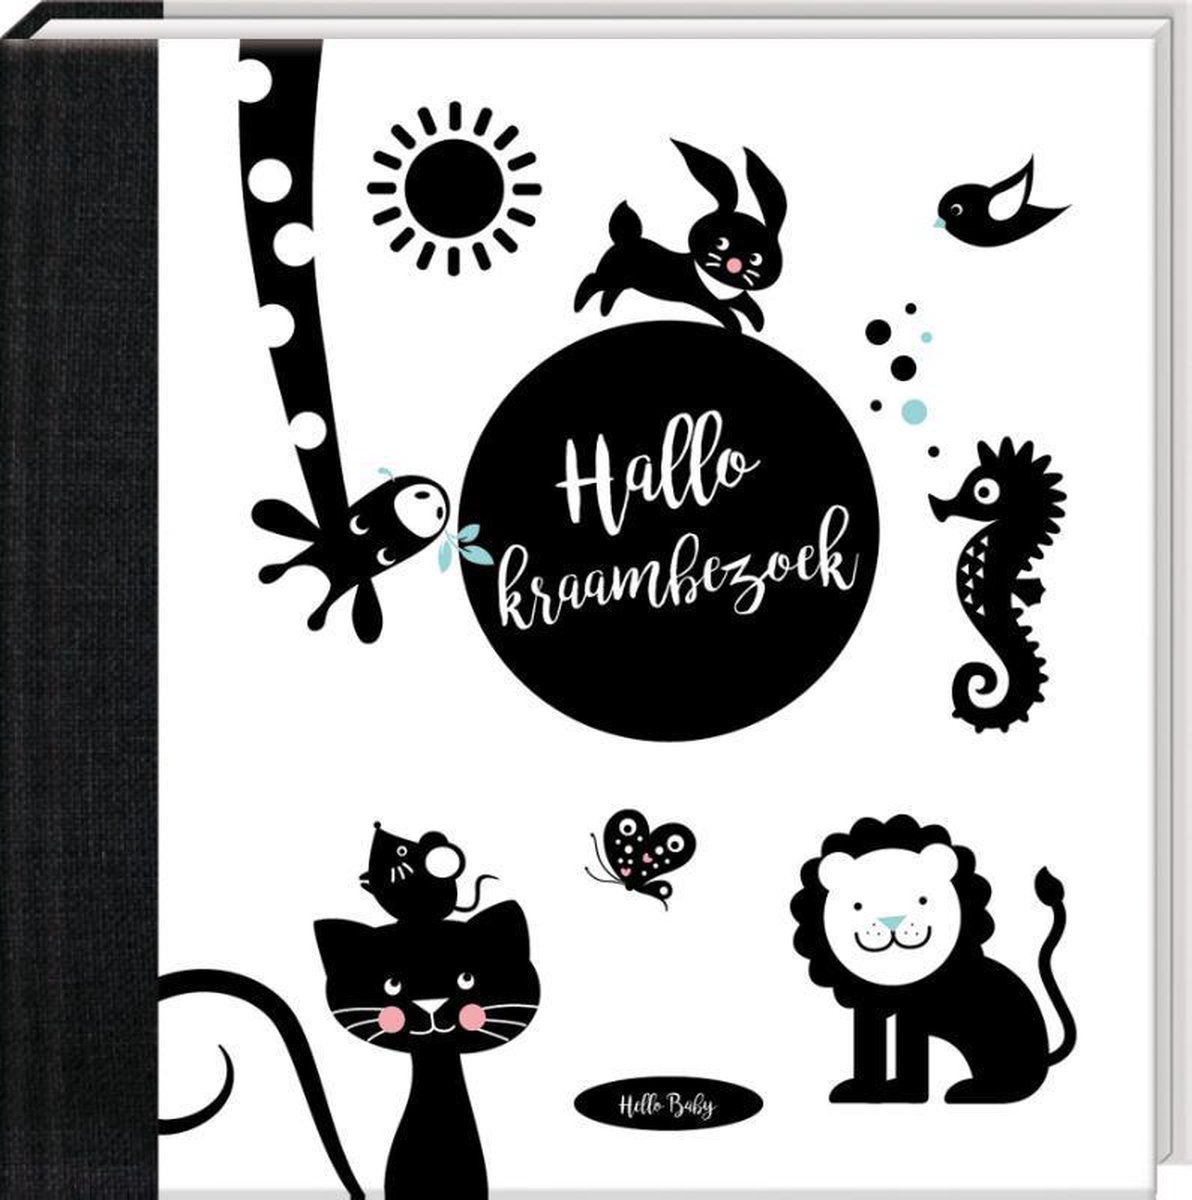 Hello Baby  -   Hallo! Kraambezoek - Imagebooks Factory Bv